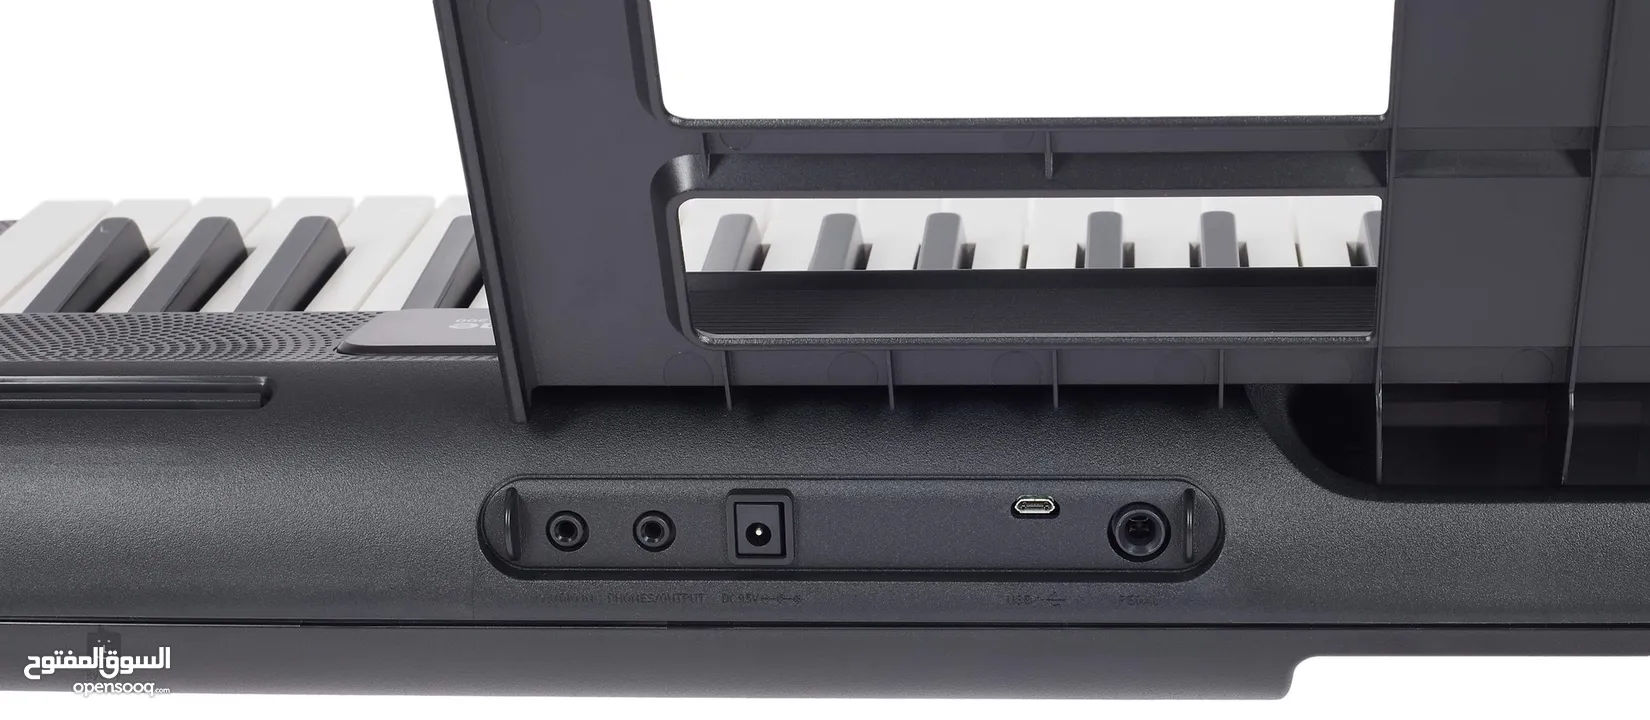 Casio Portable Keyboard, Black Color, 61     Keys CT-S200 اورج كاسيو تون 200 مستعمل بحالة الجديد